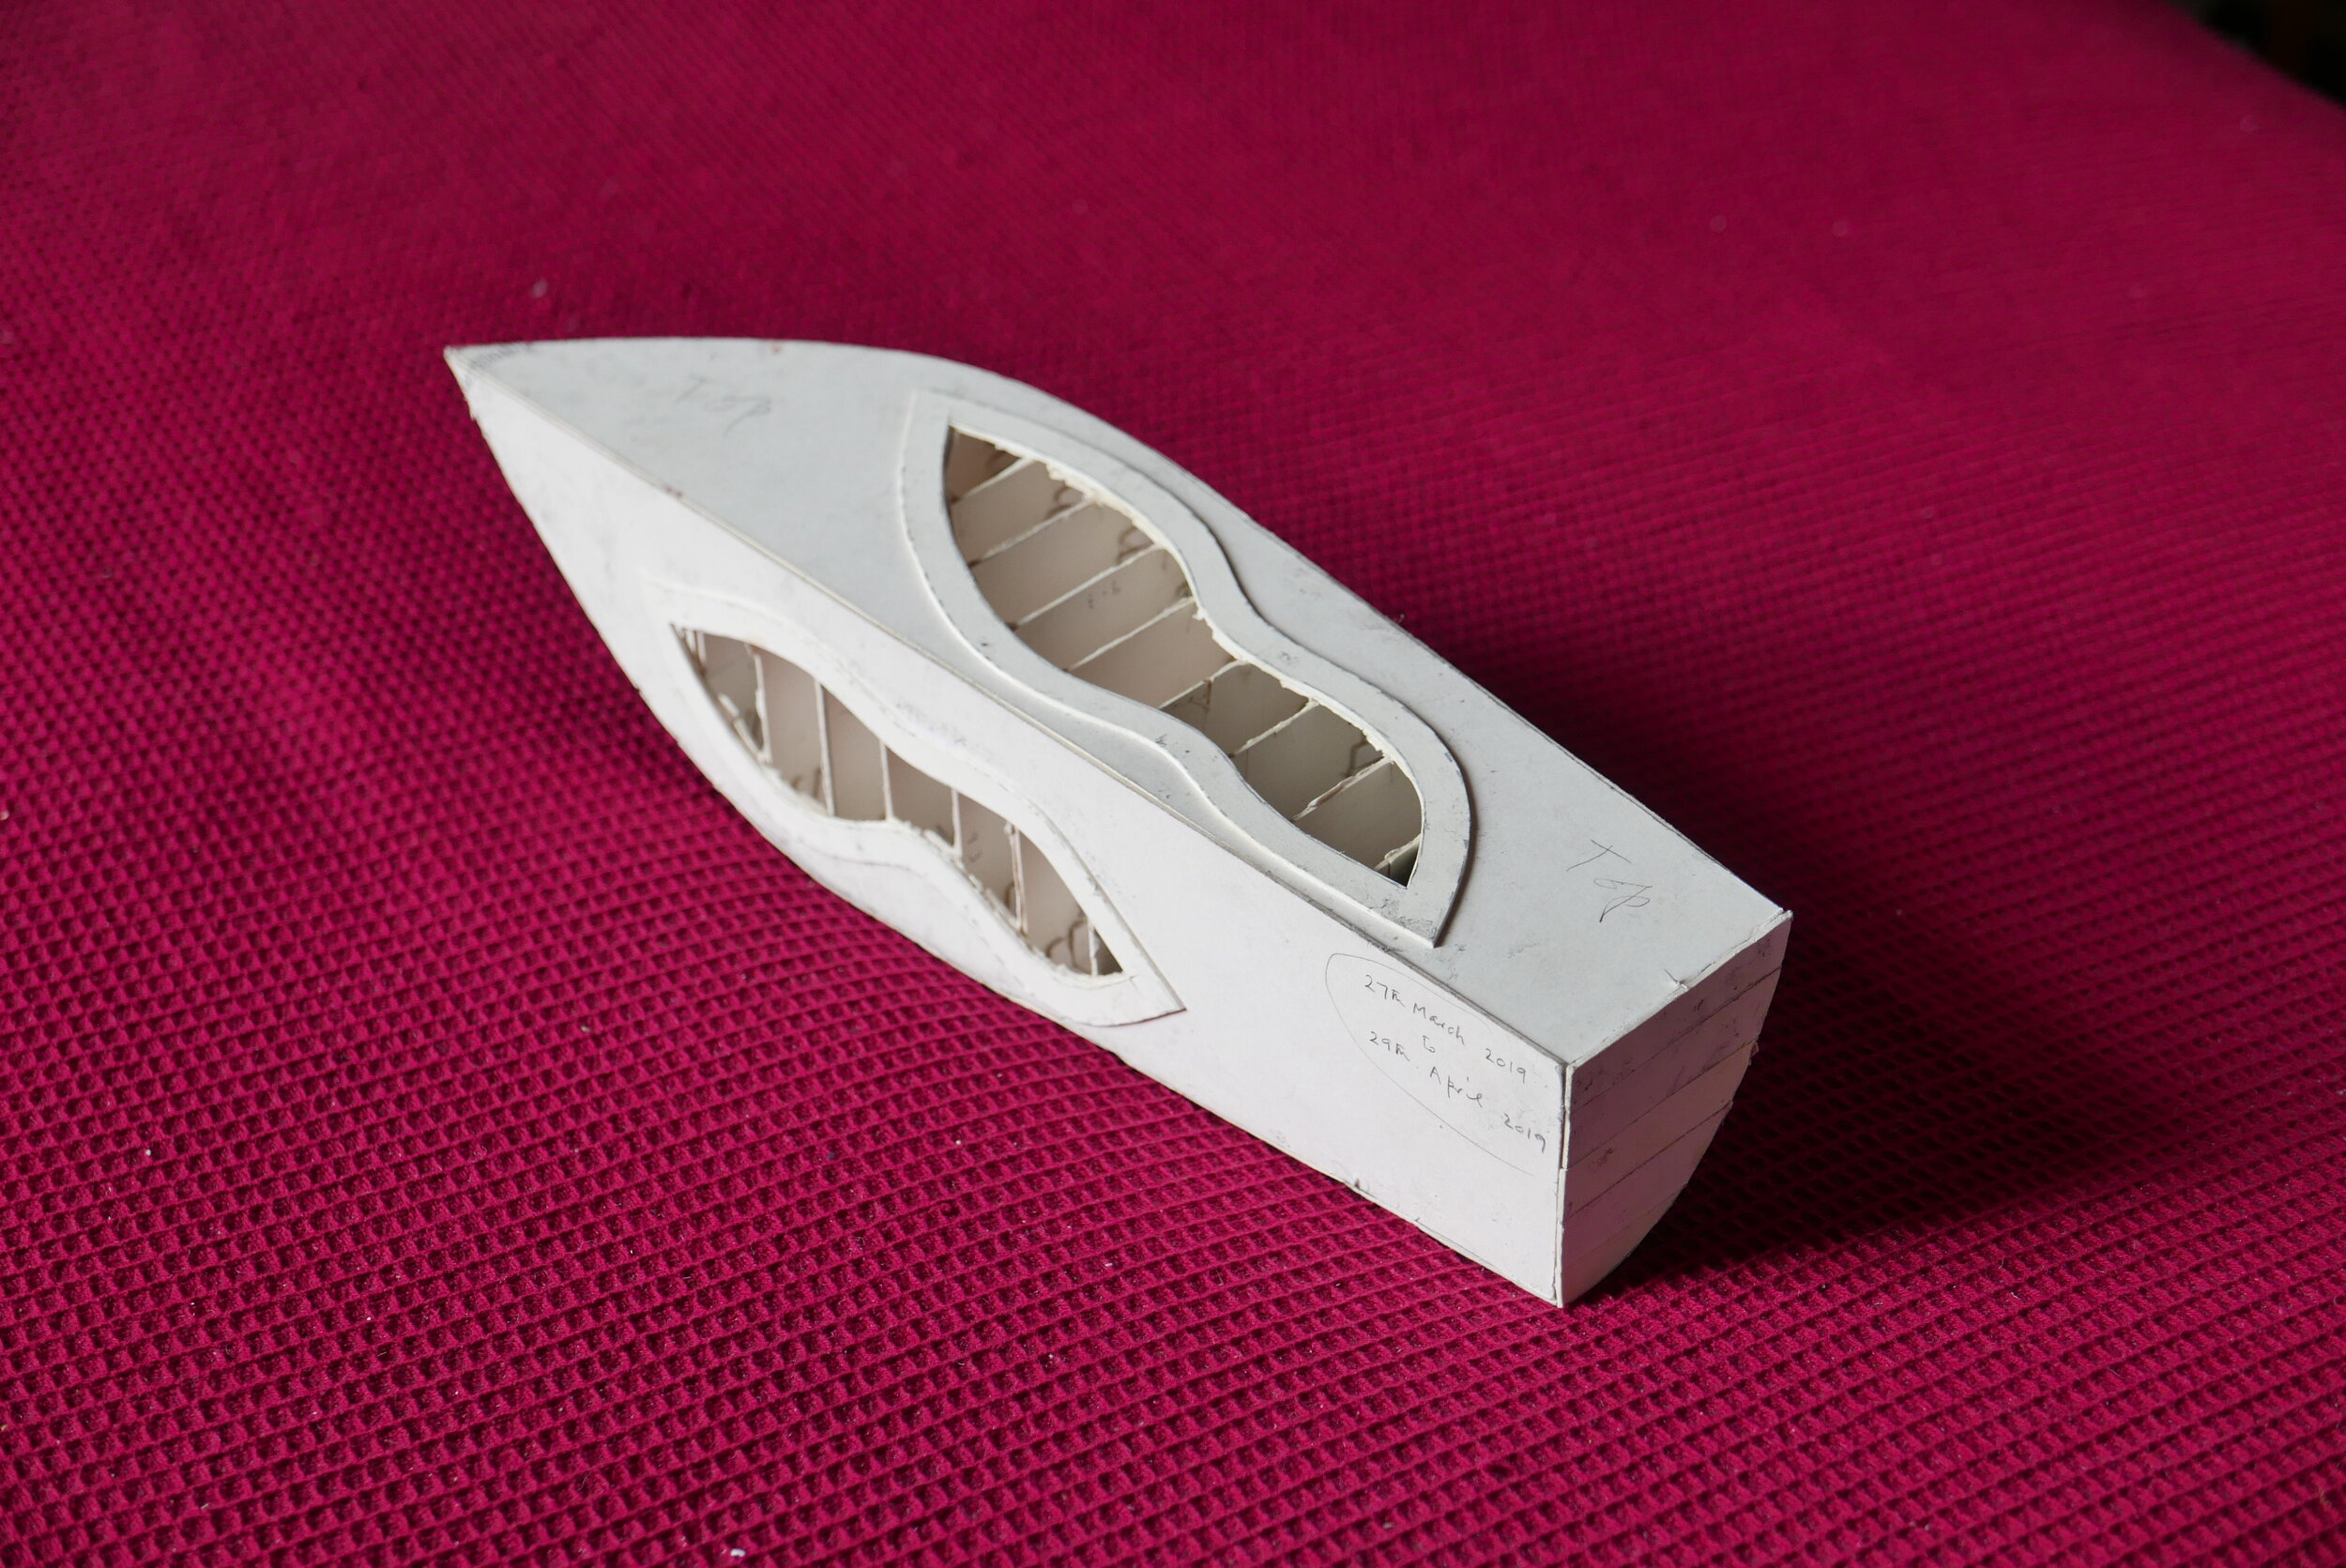 Card models of rowing boats (2019) 004.JPG